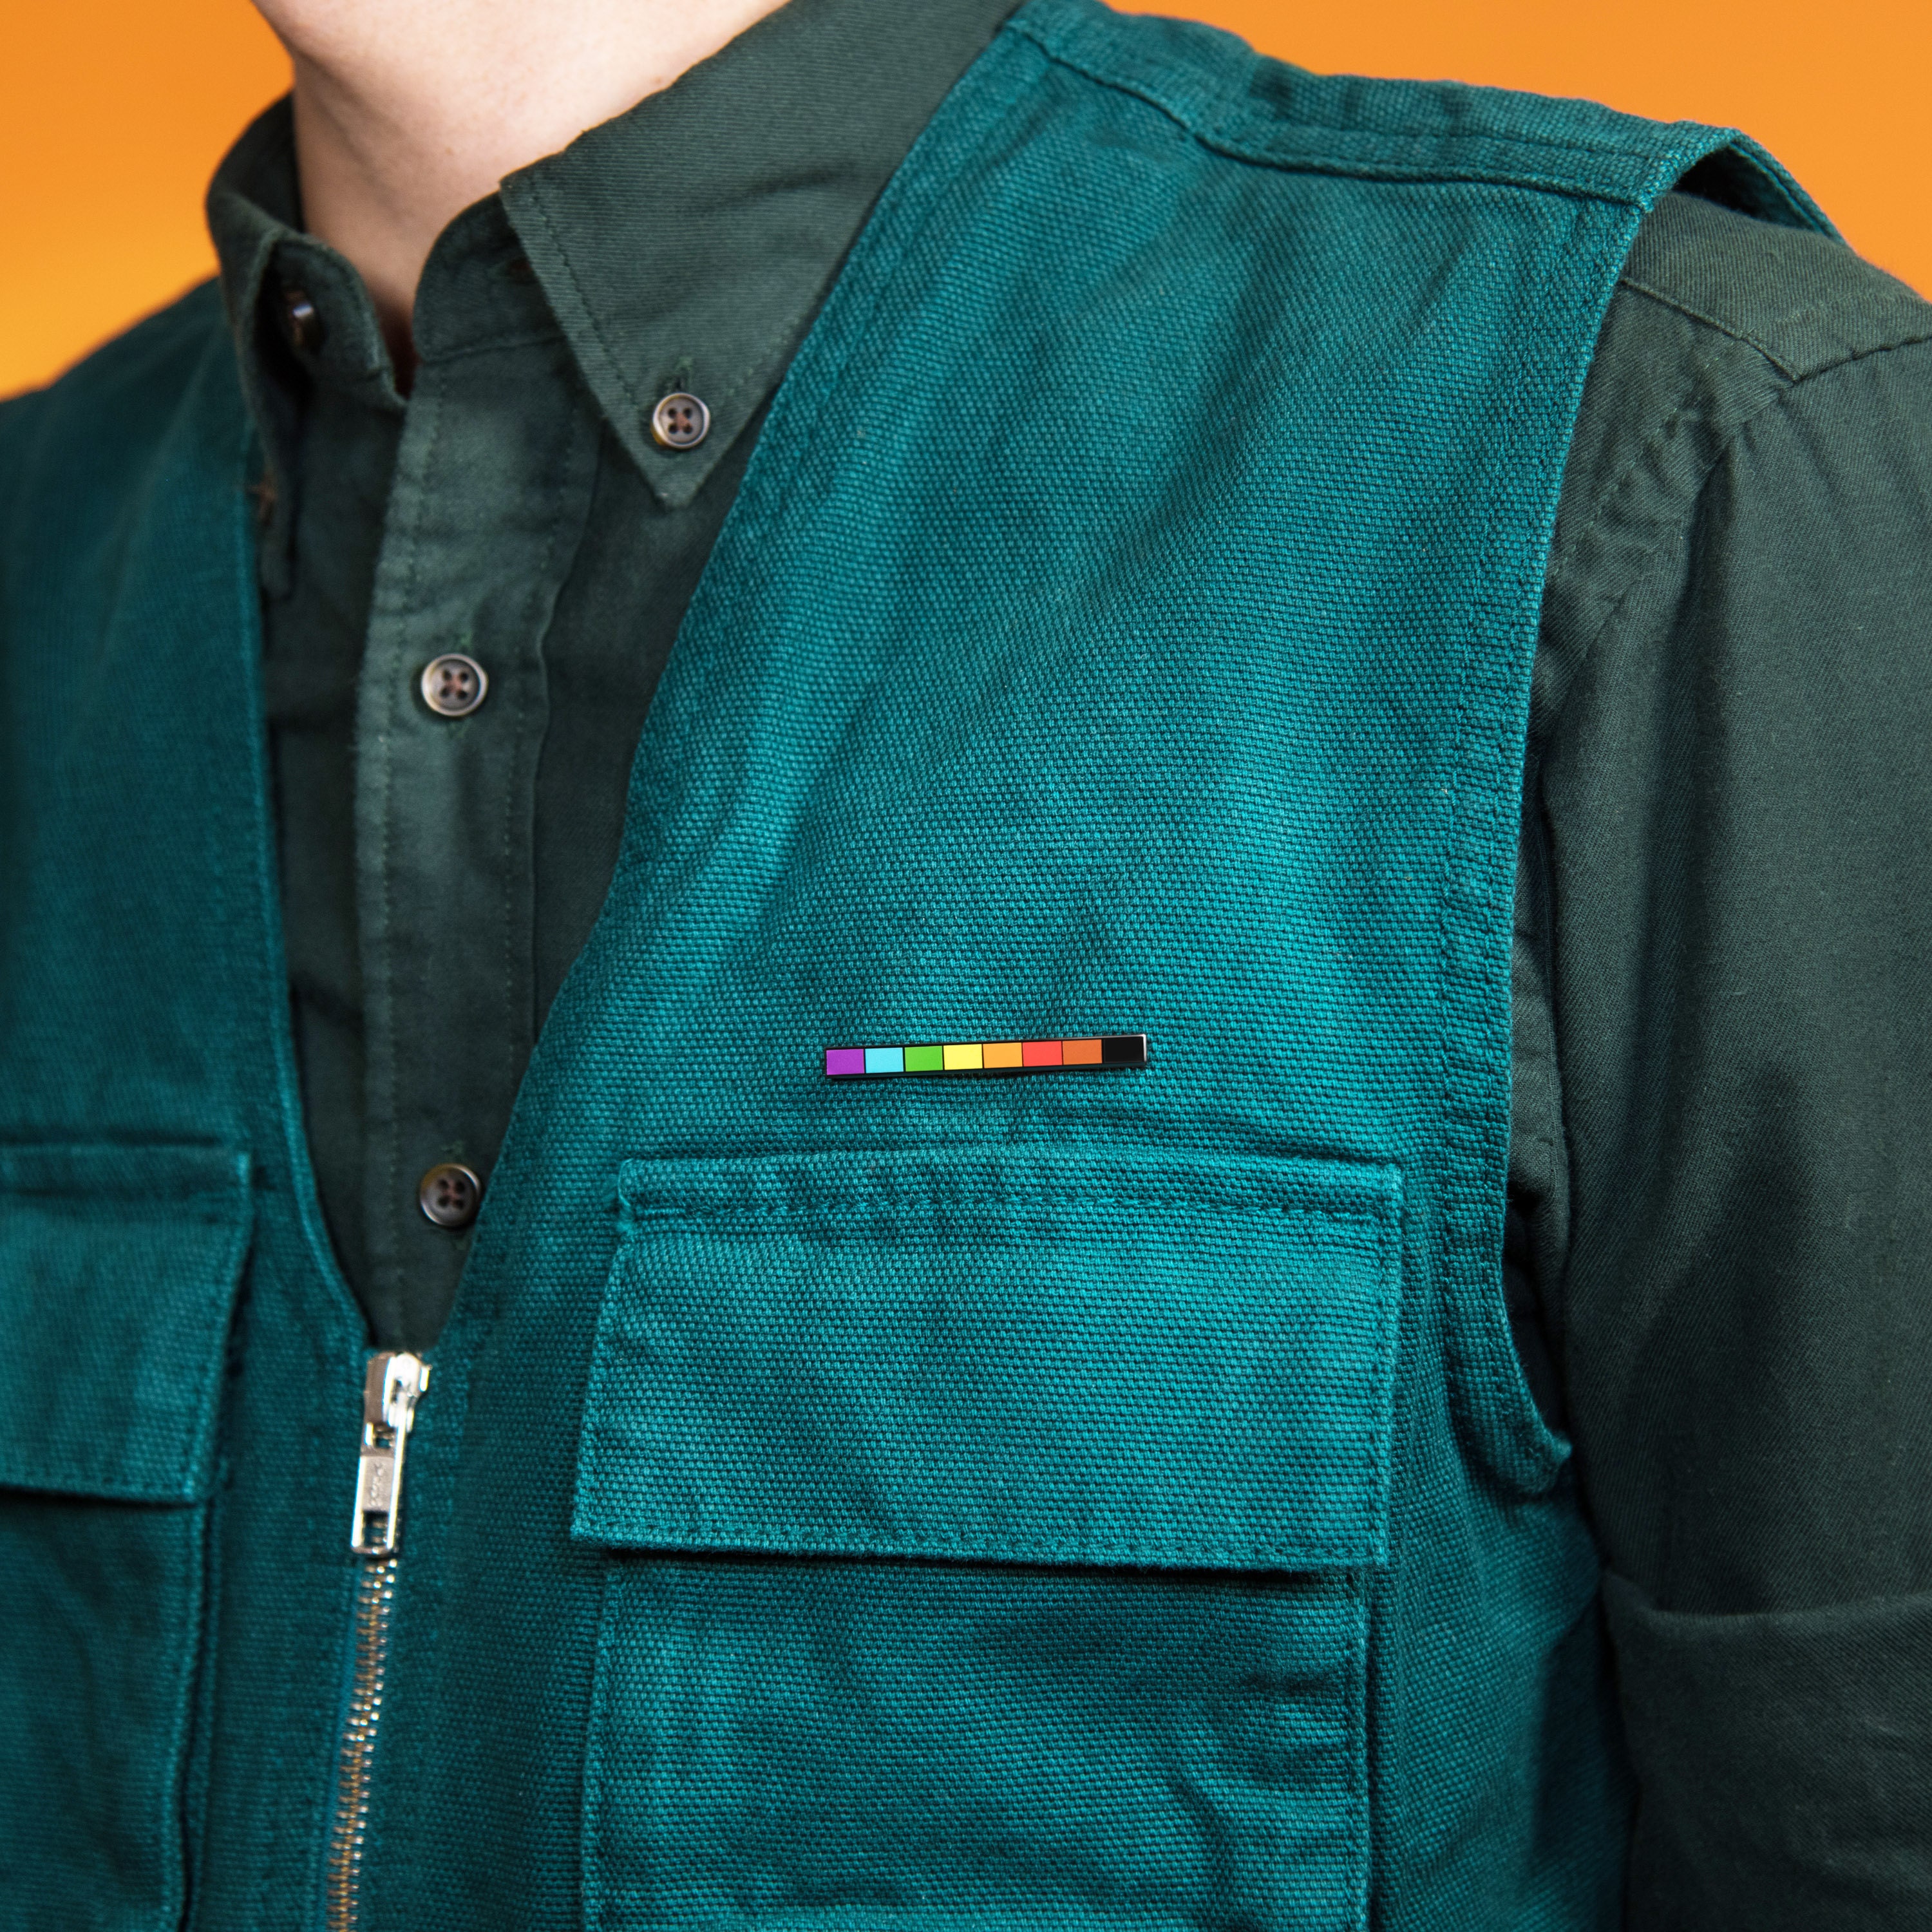 Inclusive LGBT Rainbow Flag Lapel Pin Wedding Suit